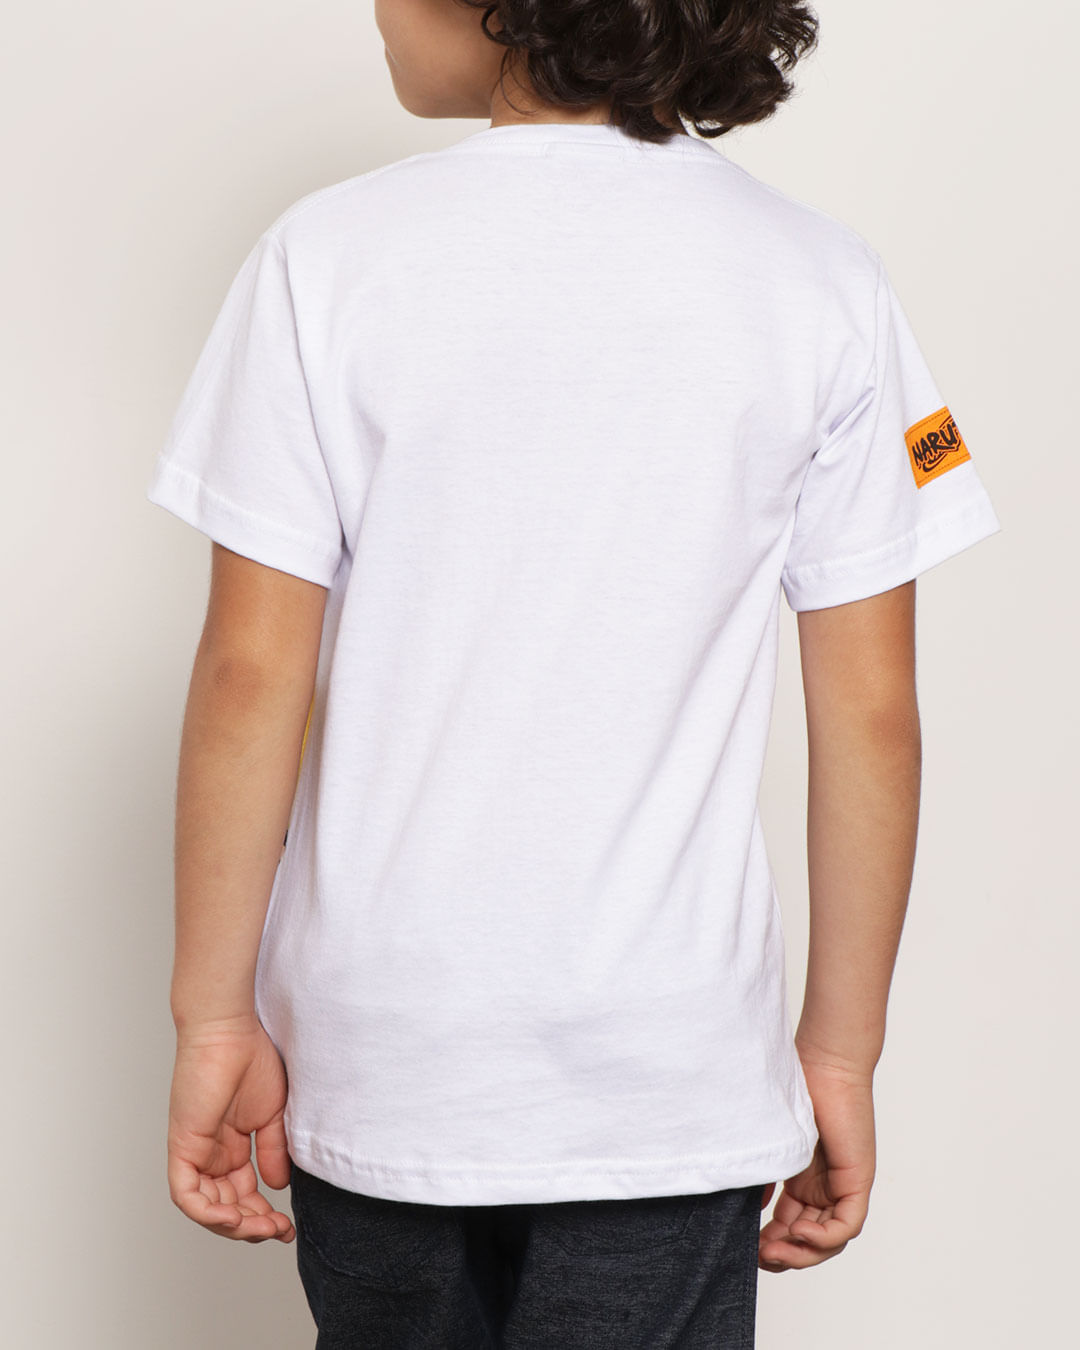 Camiseta-T38300-Mc-M-410-Naruto---Branco